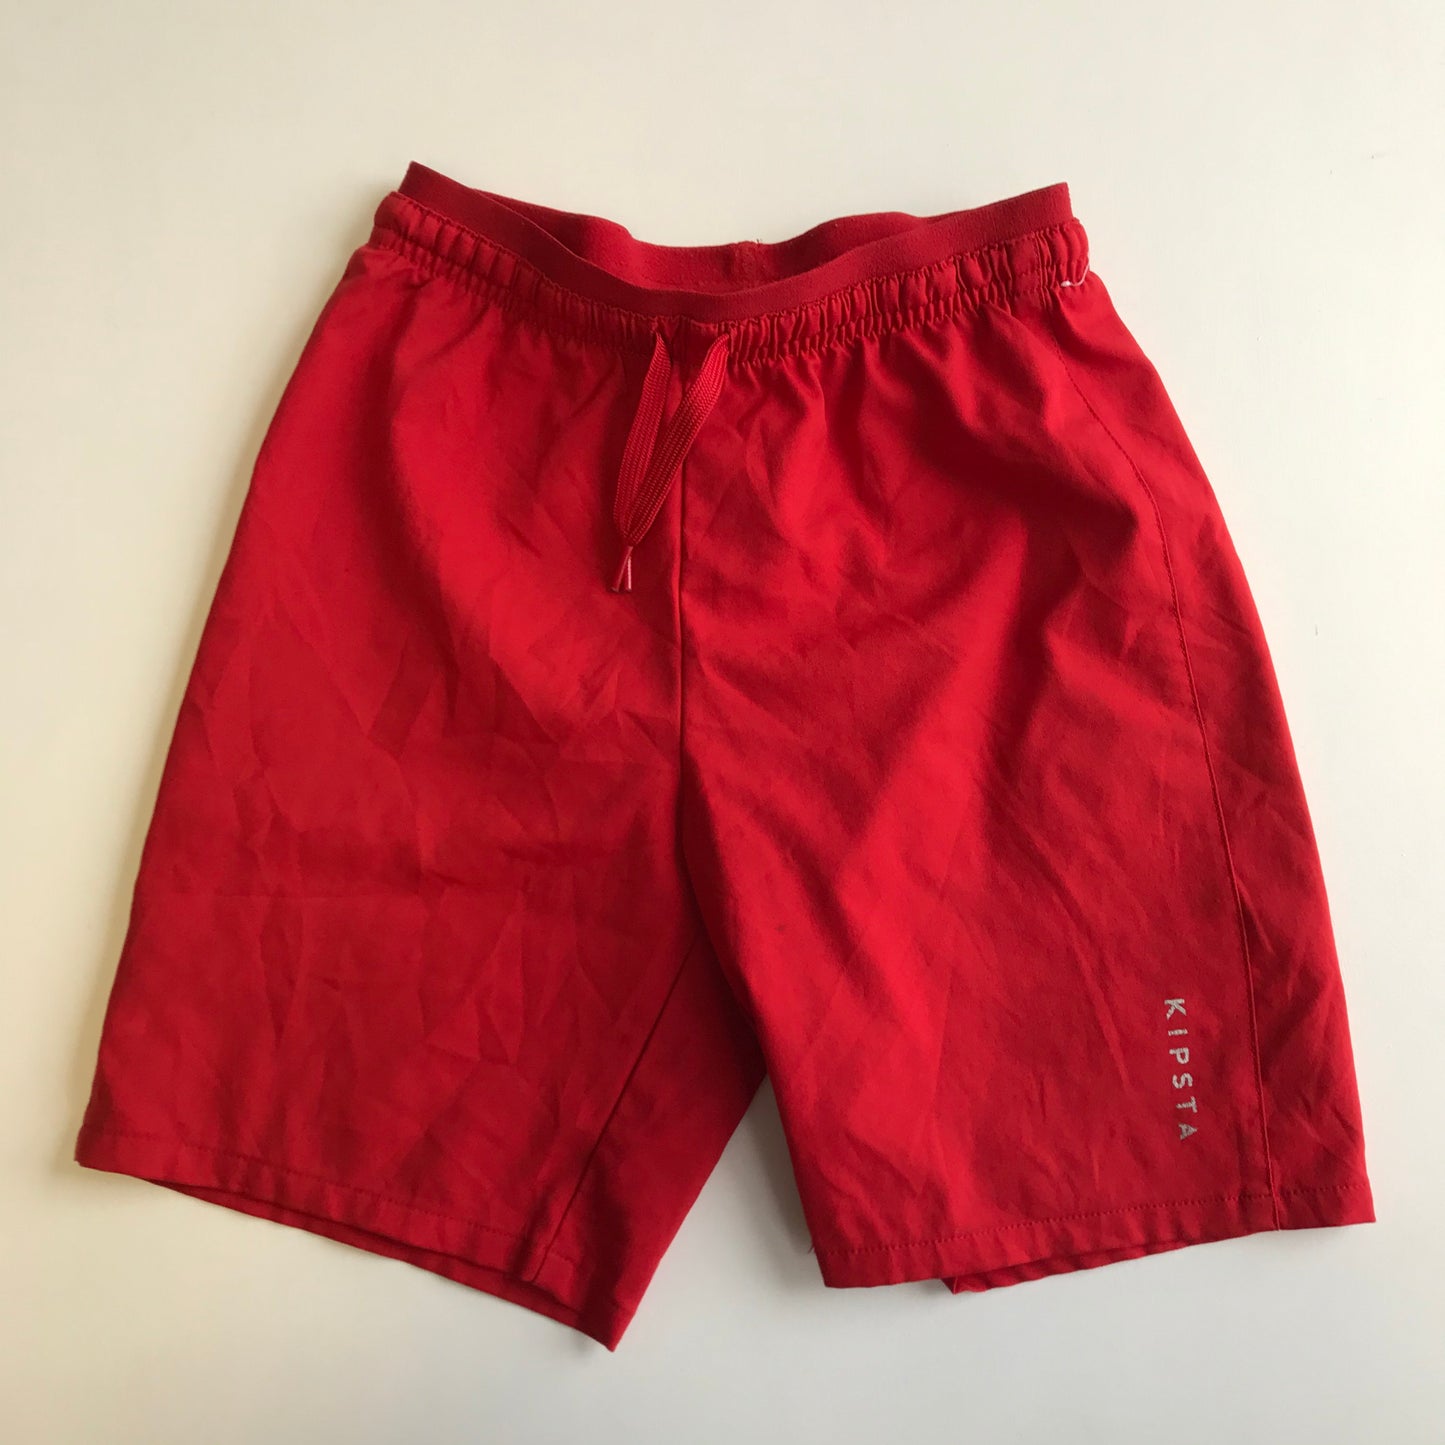 Shorts - Red Kipsta - Age 12